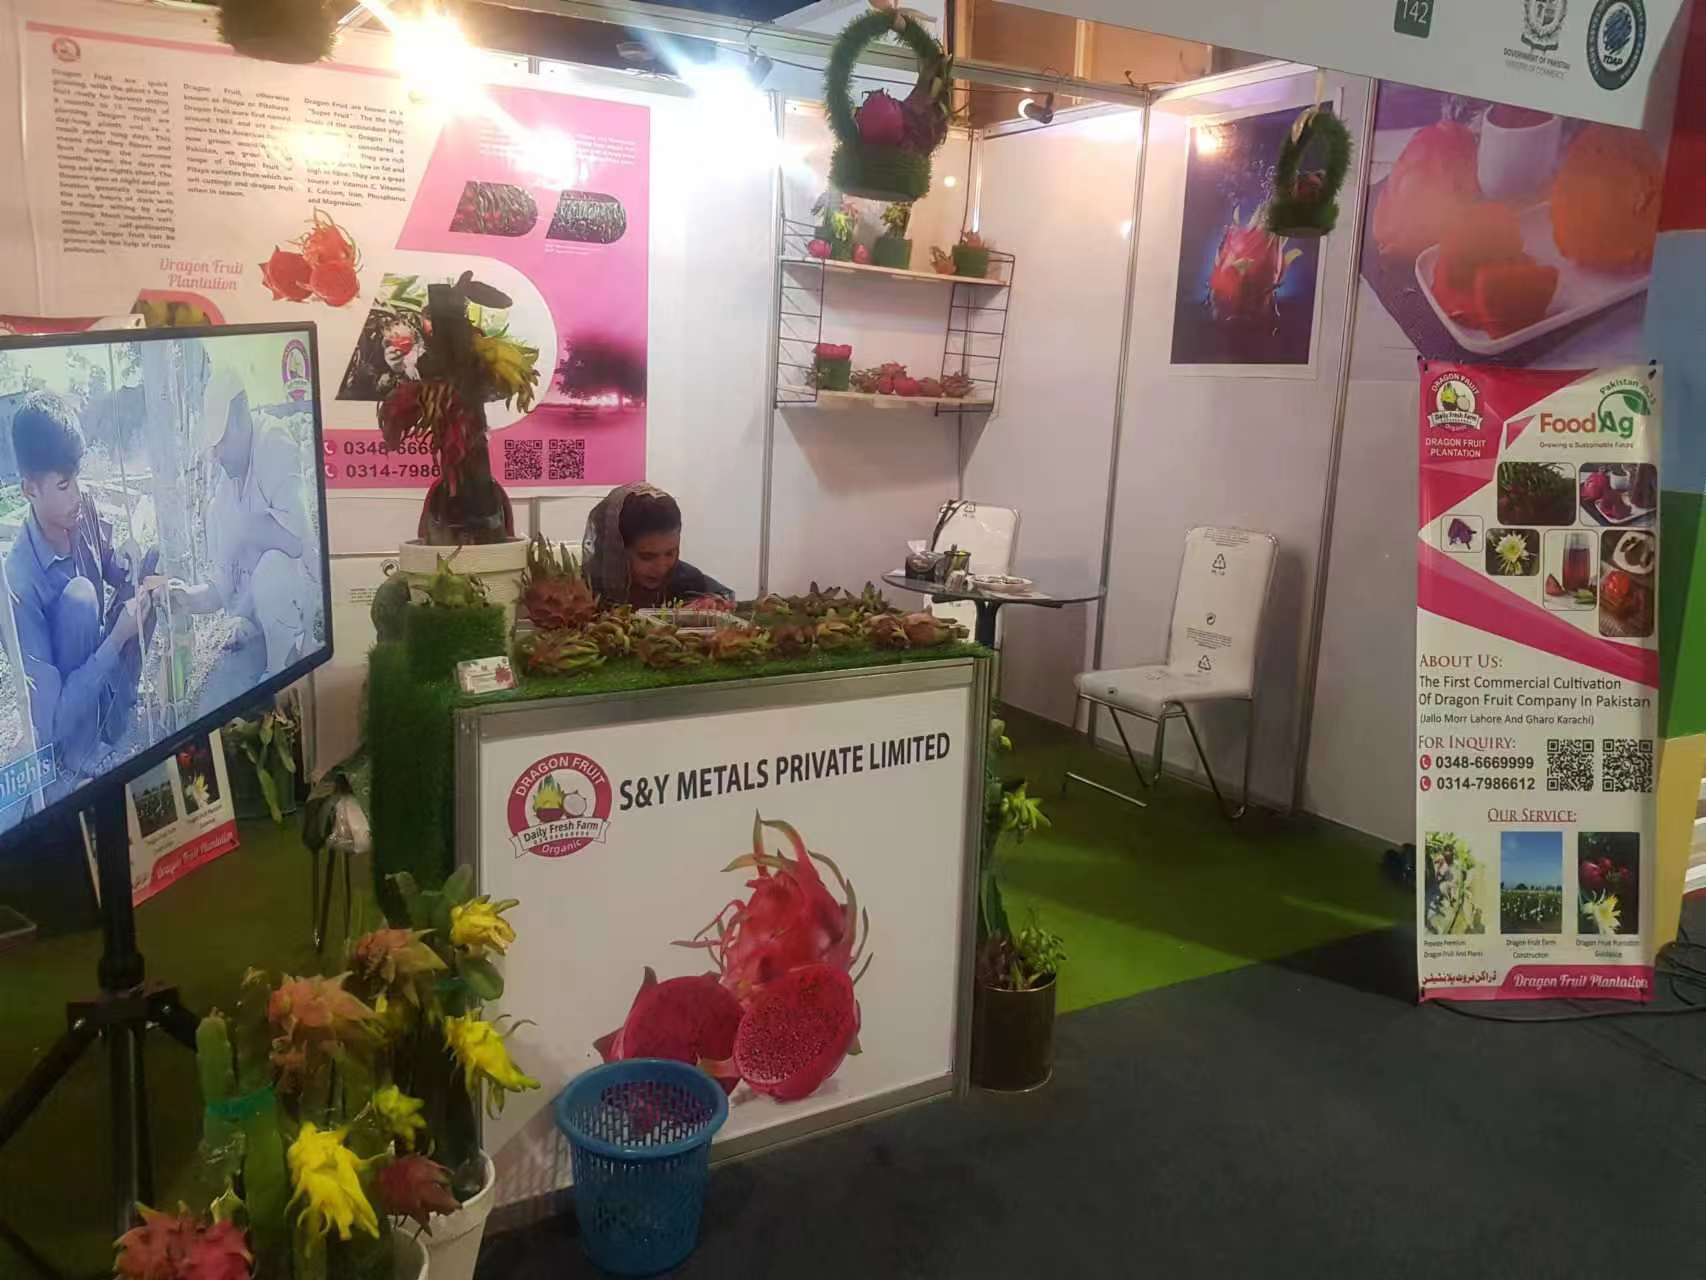 Chinese enterprise promotes Pakistani dragon fruit export through FoodAg